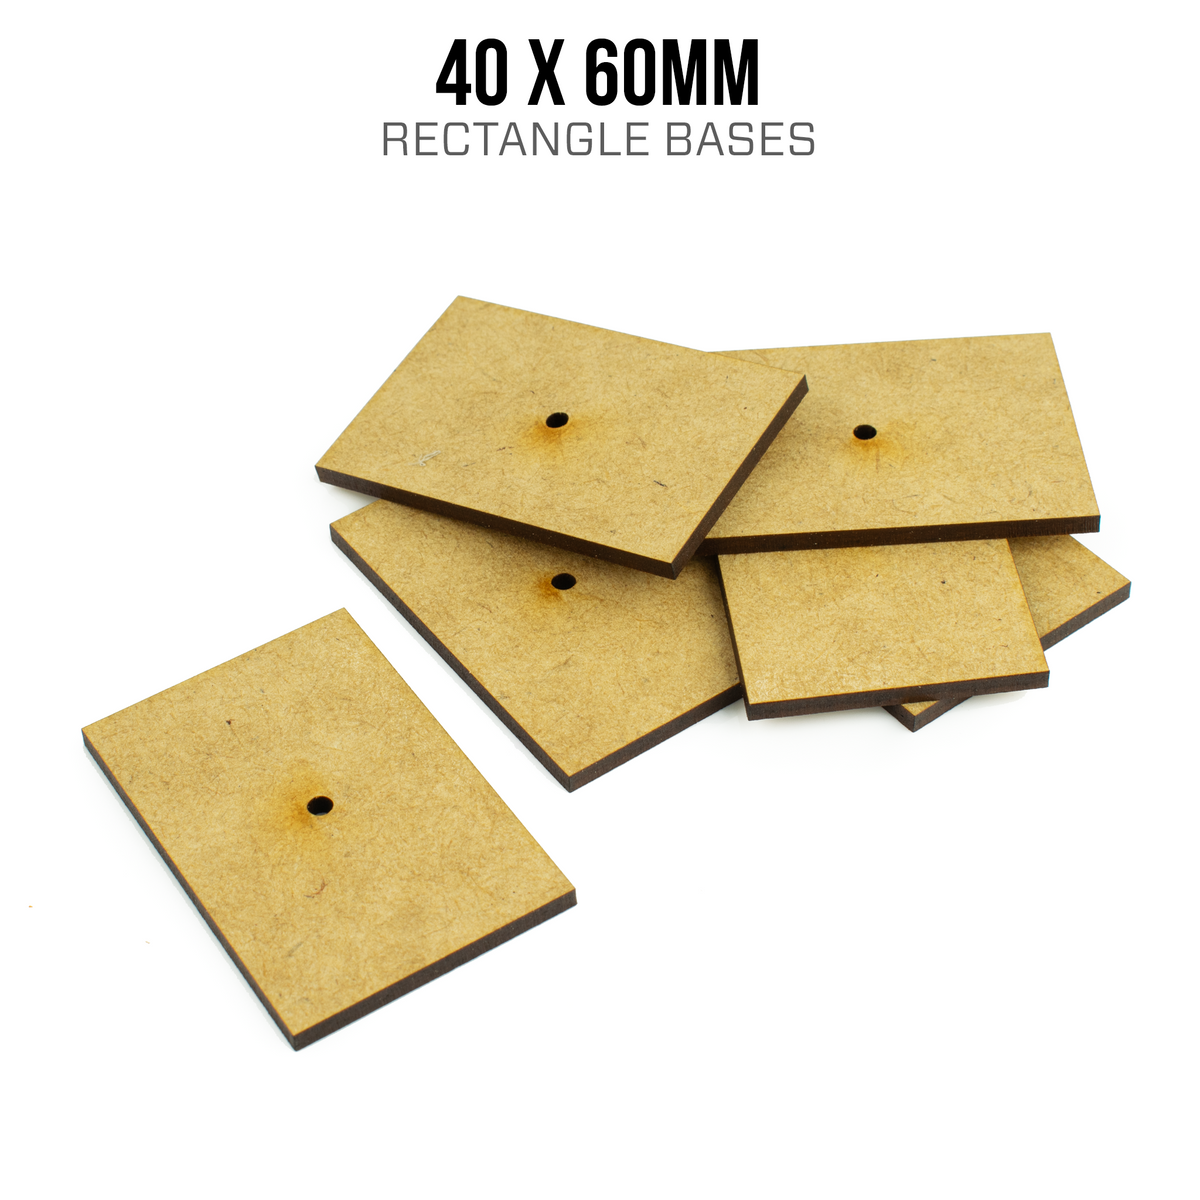 Bases rectangulares de 40 x 60 mm